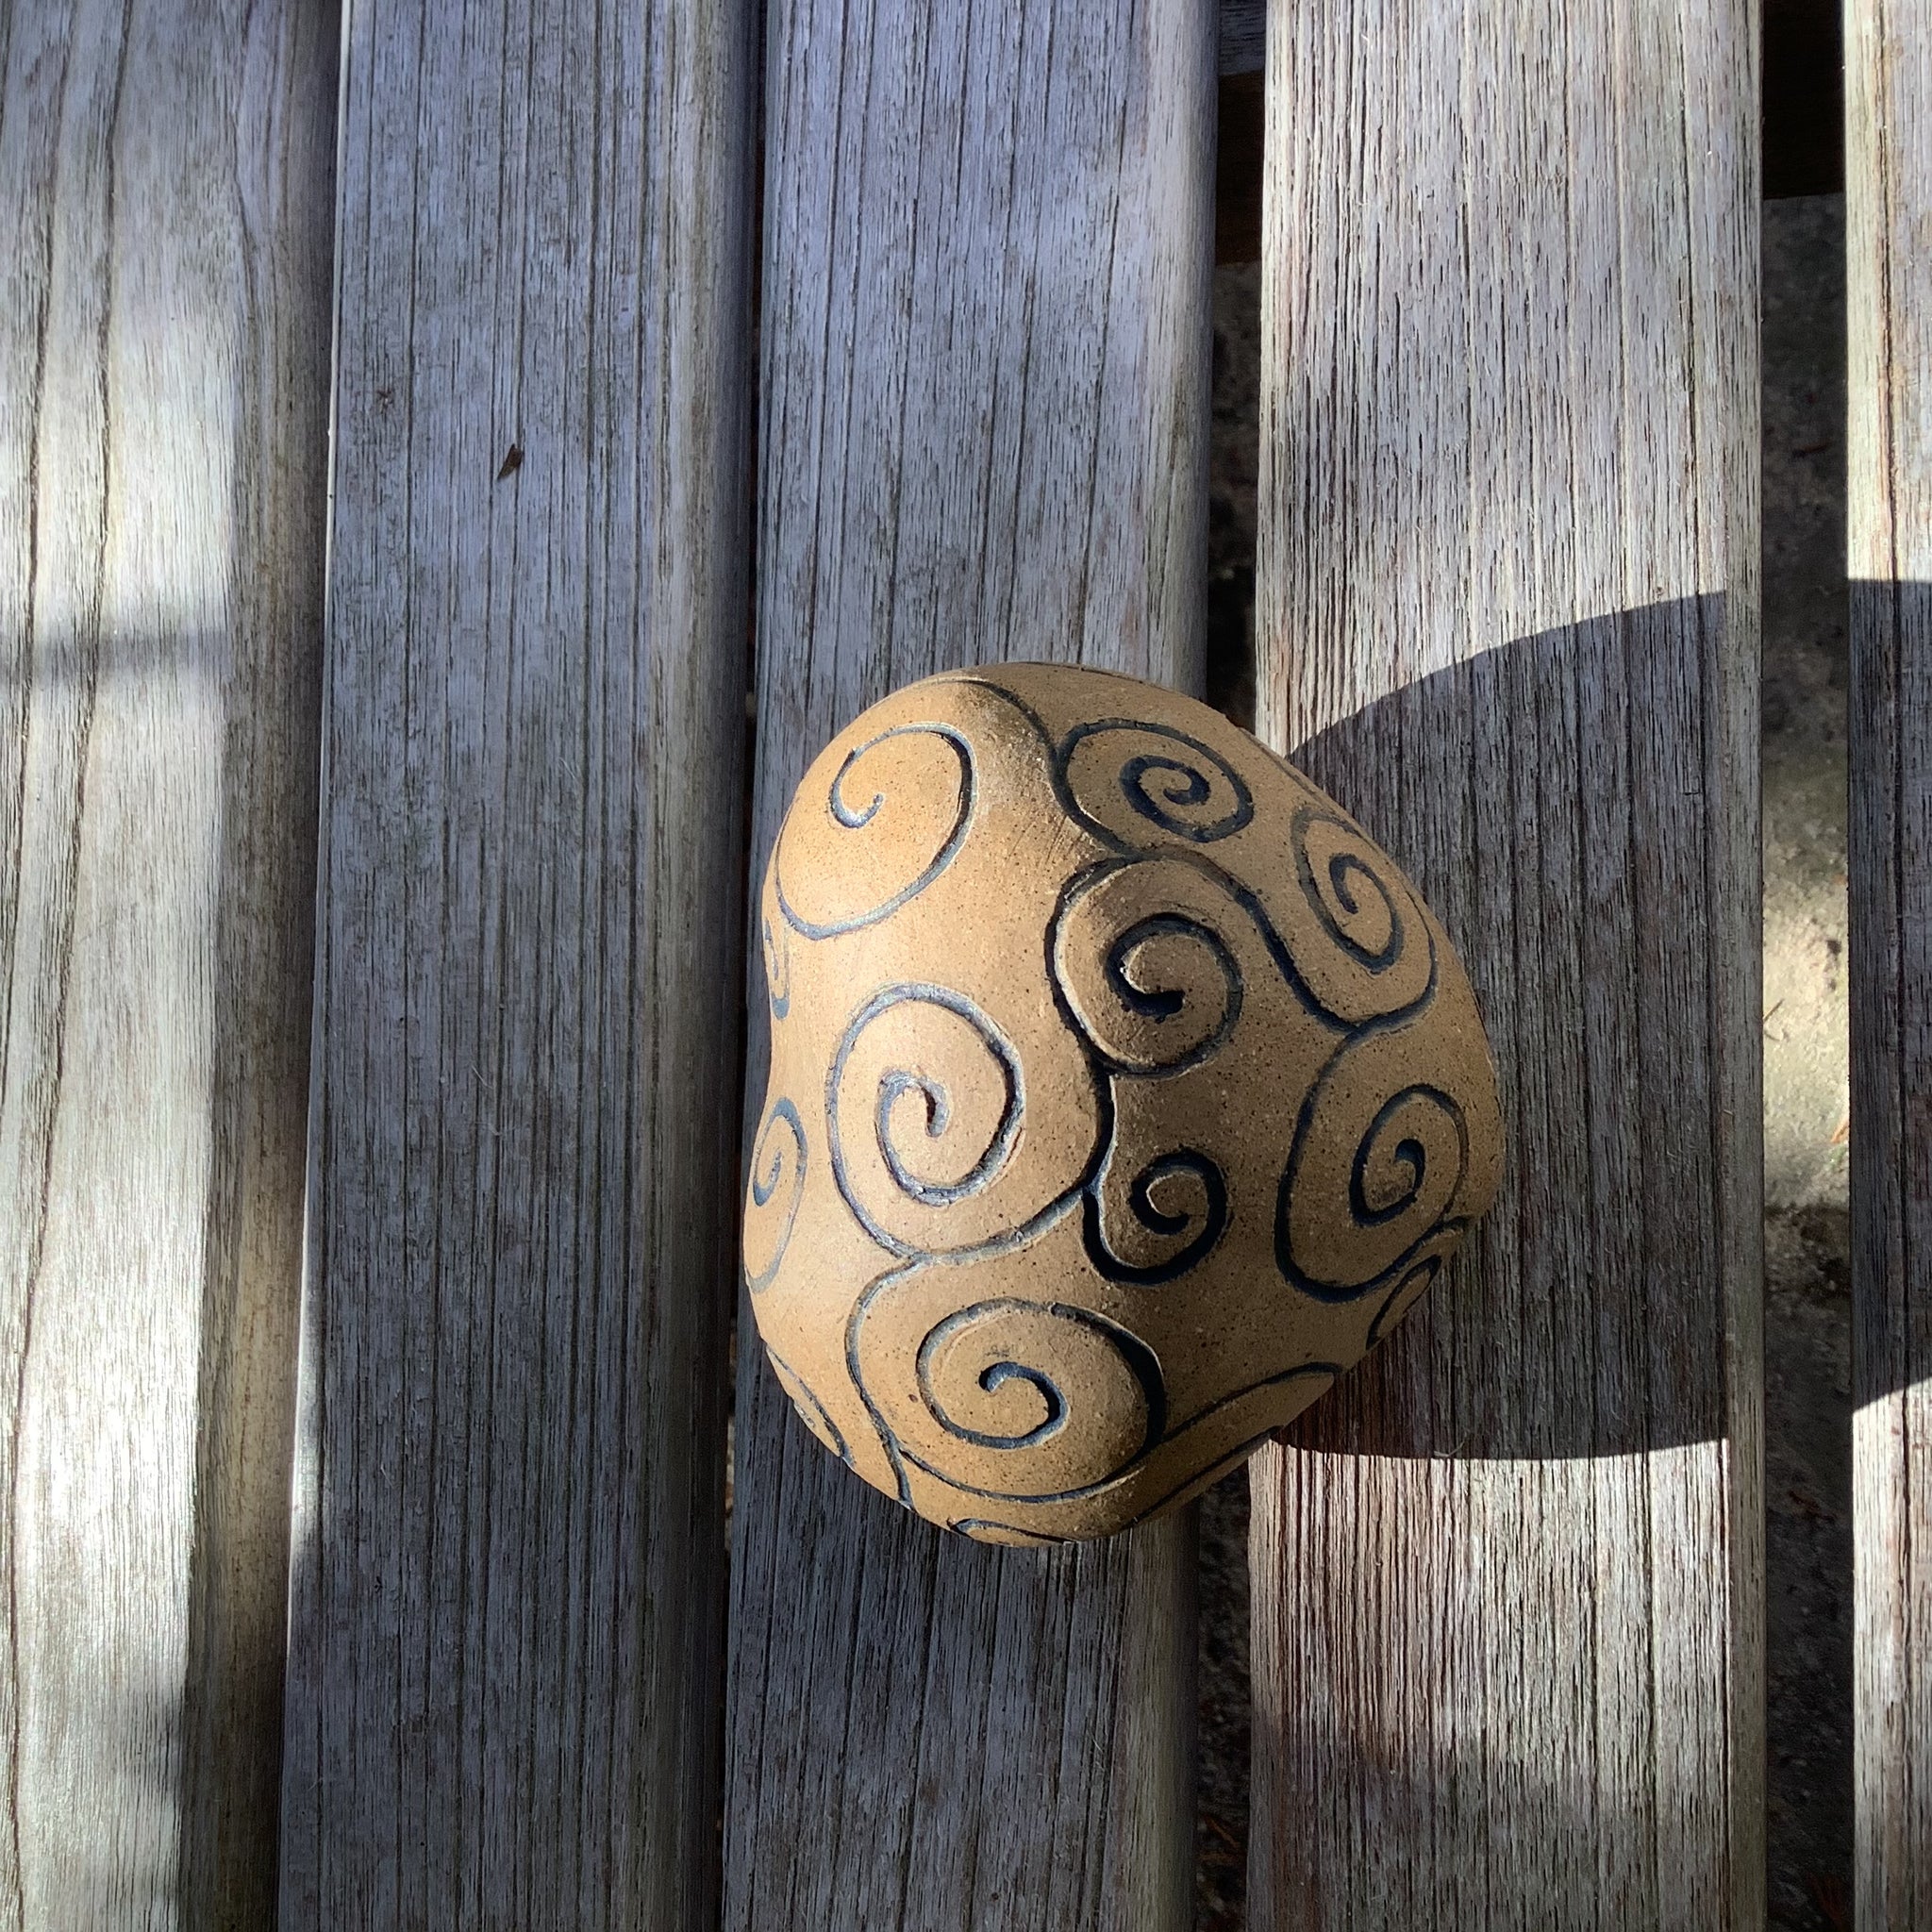 Handmade Ceramic Heart Rattle